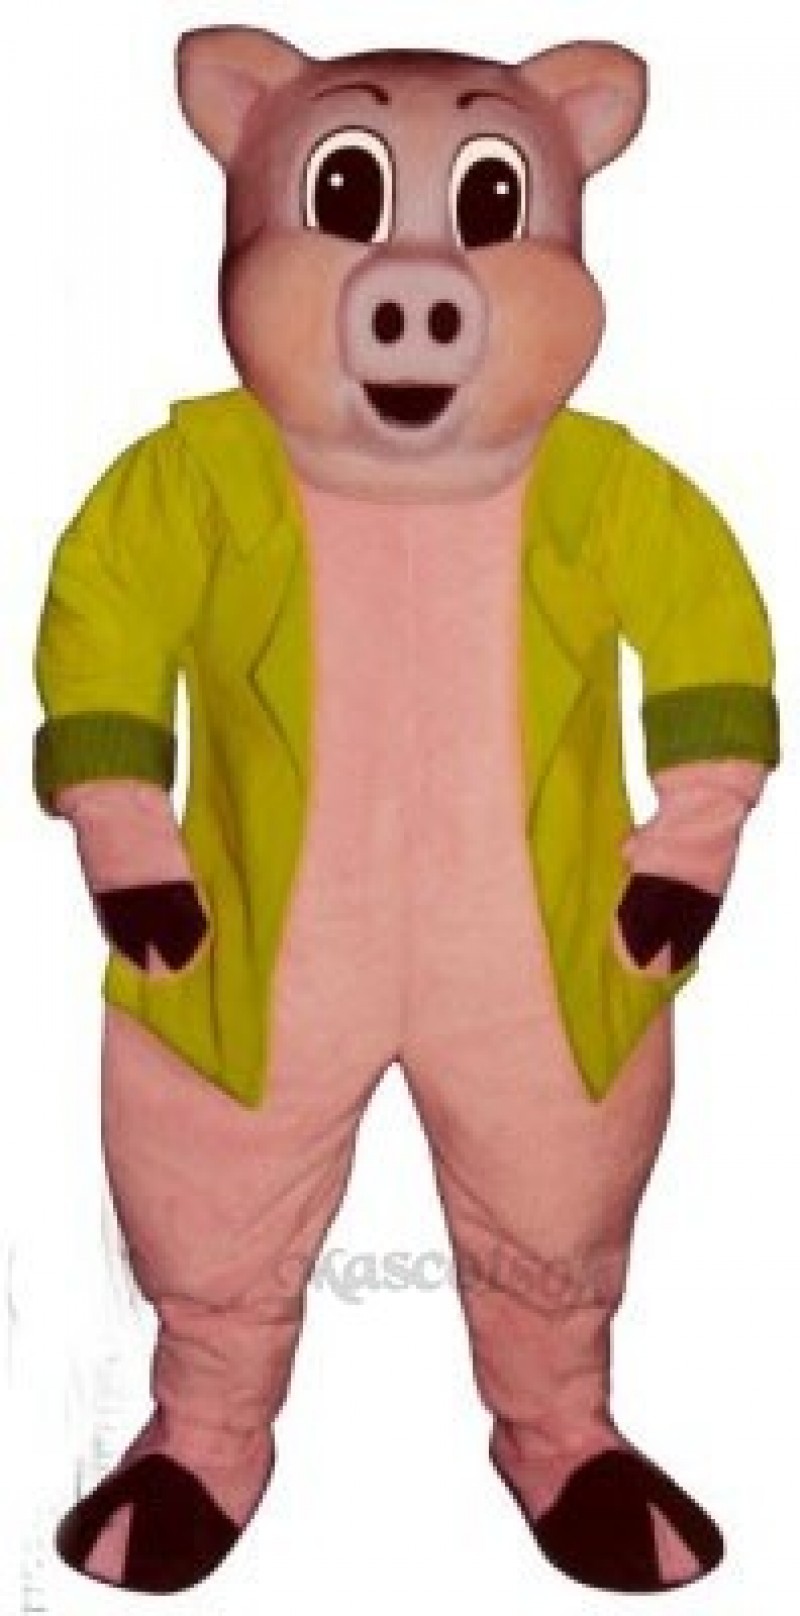 Big Pig with Jacket Mascot Costume